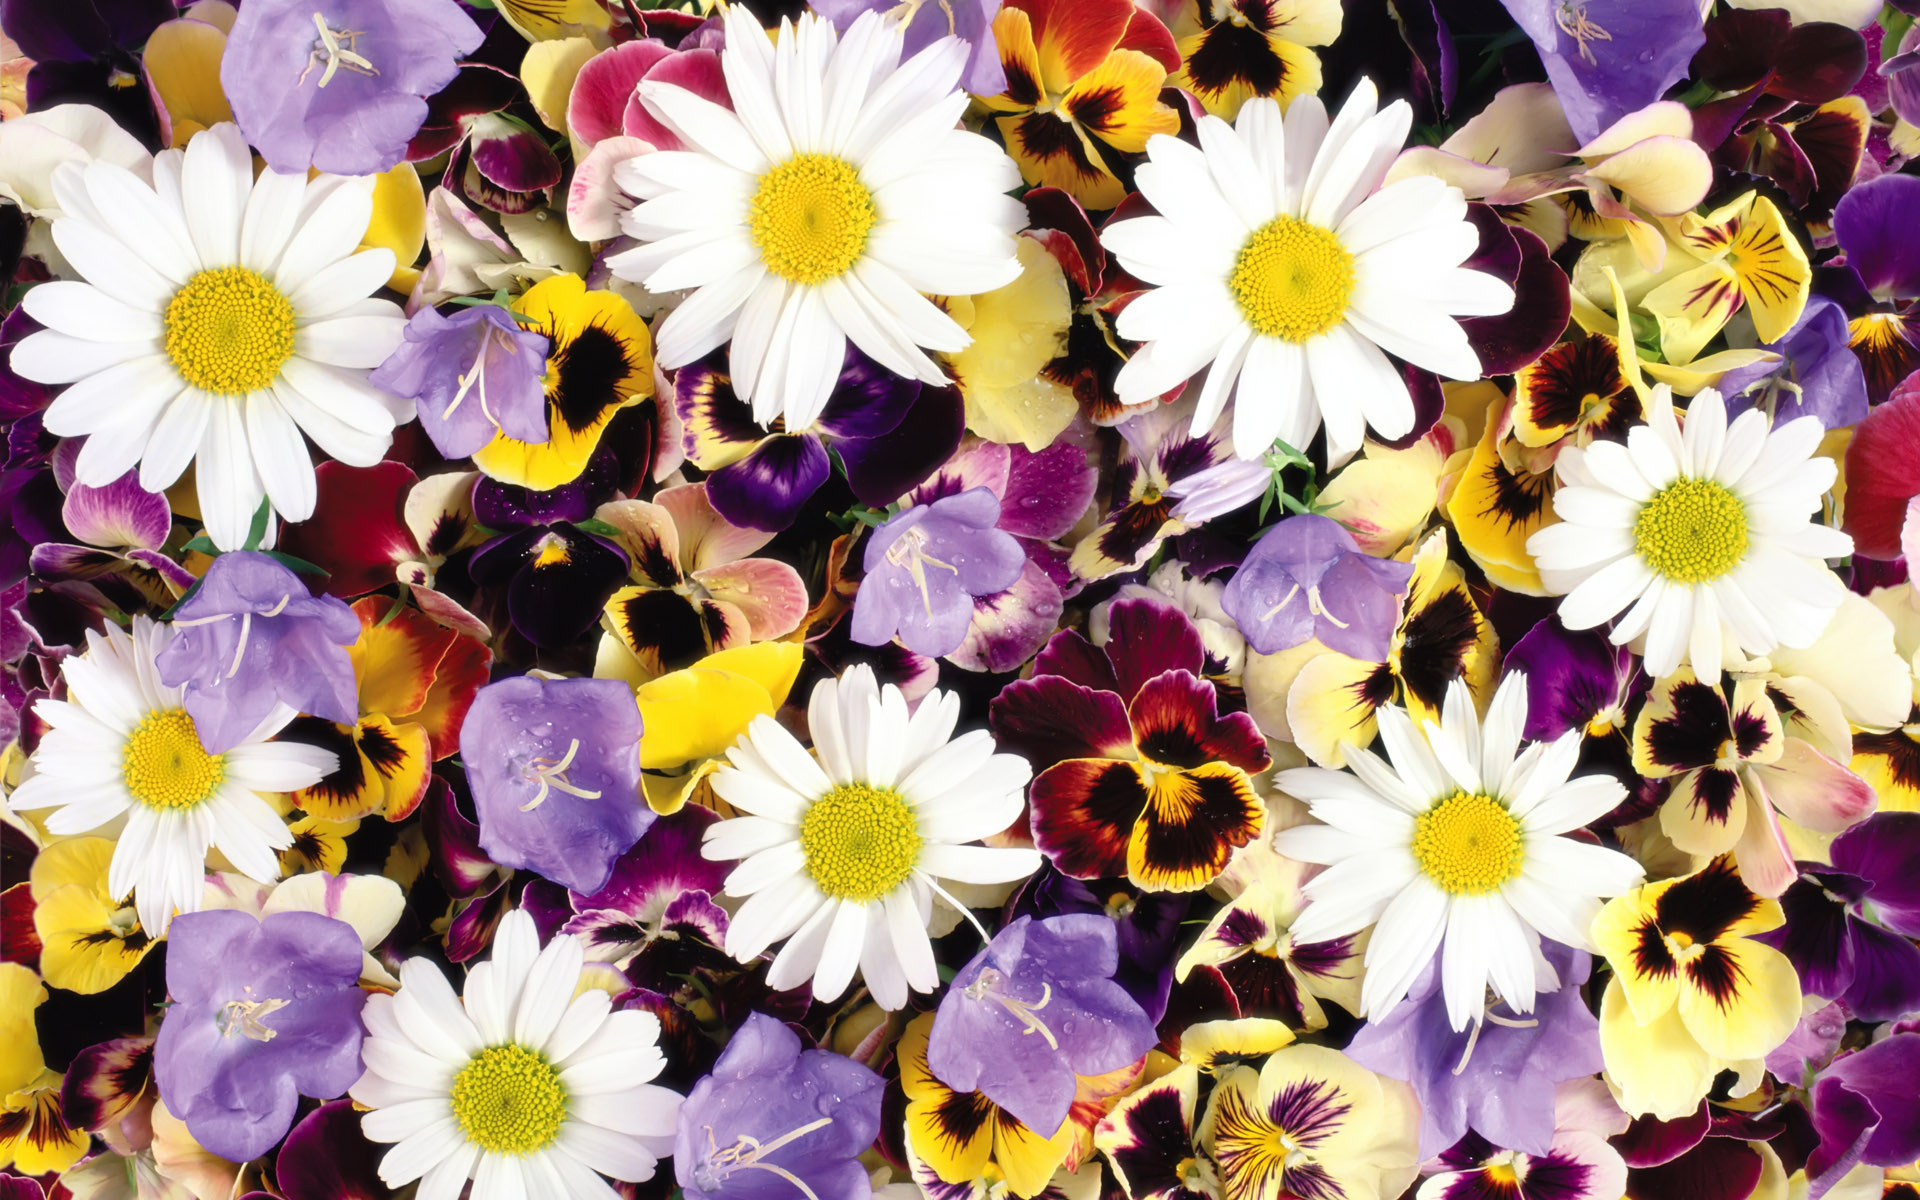 1920 Series III flowers background 13594 - Flower background - Flowers